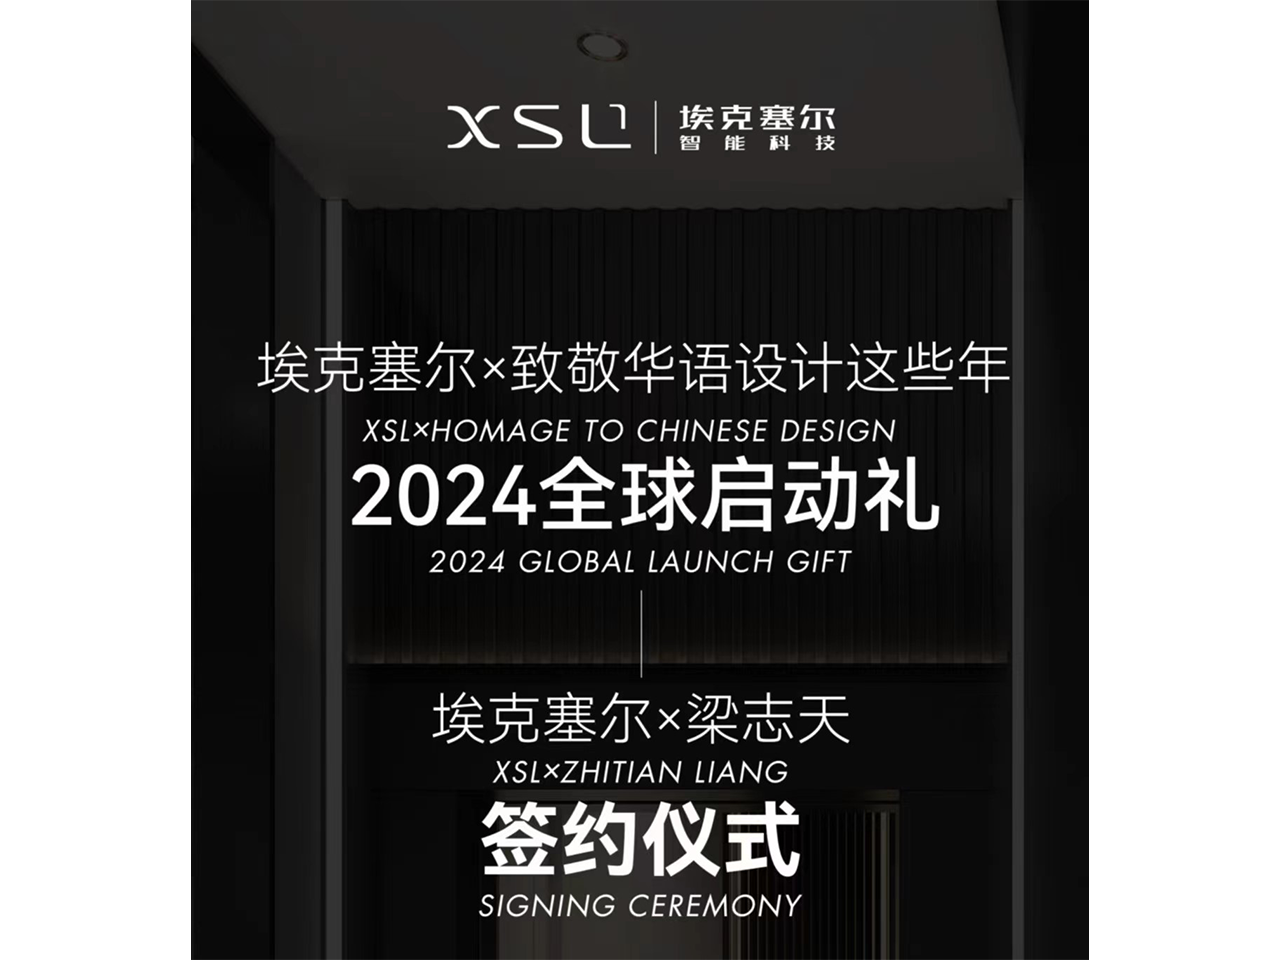 XSL เป็นการแสดงความเคารพต่อการออกแบบของจีนในช่วงหลายปีที่ผ่านมา